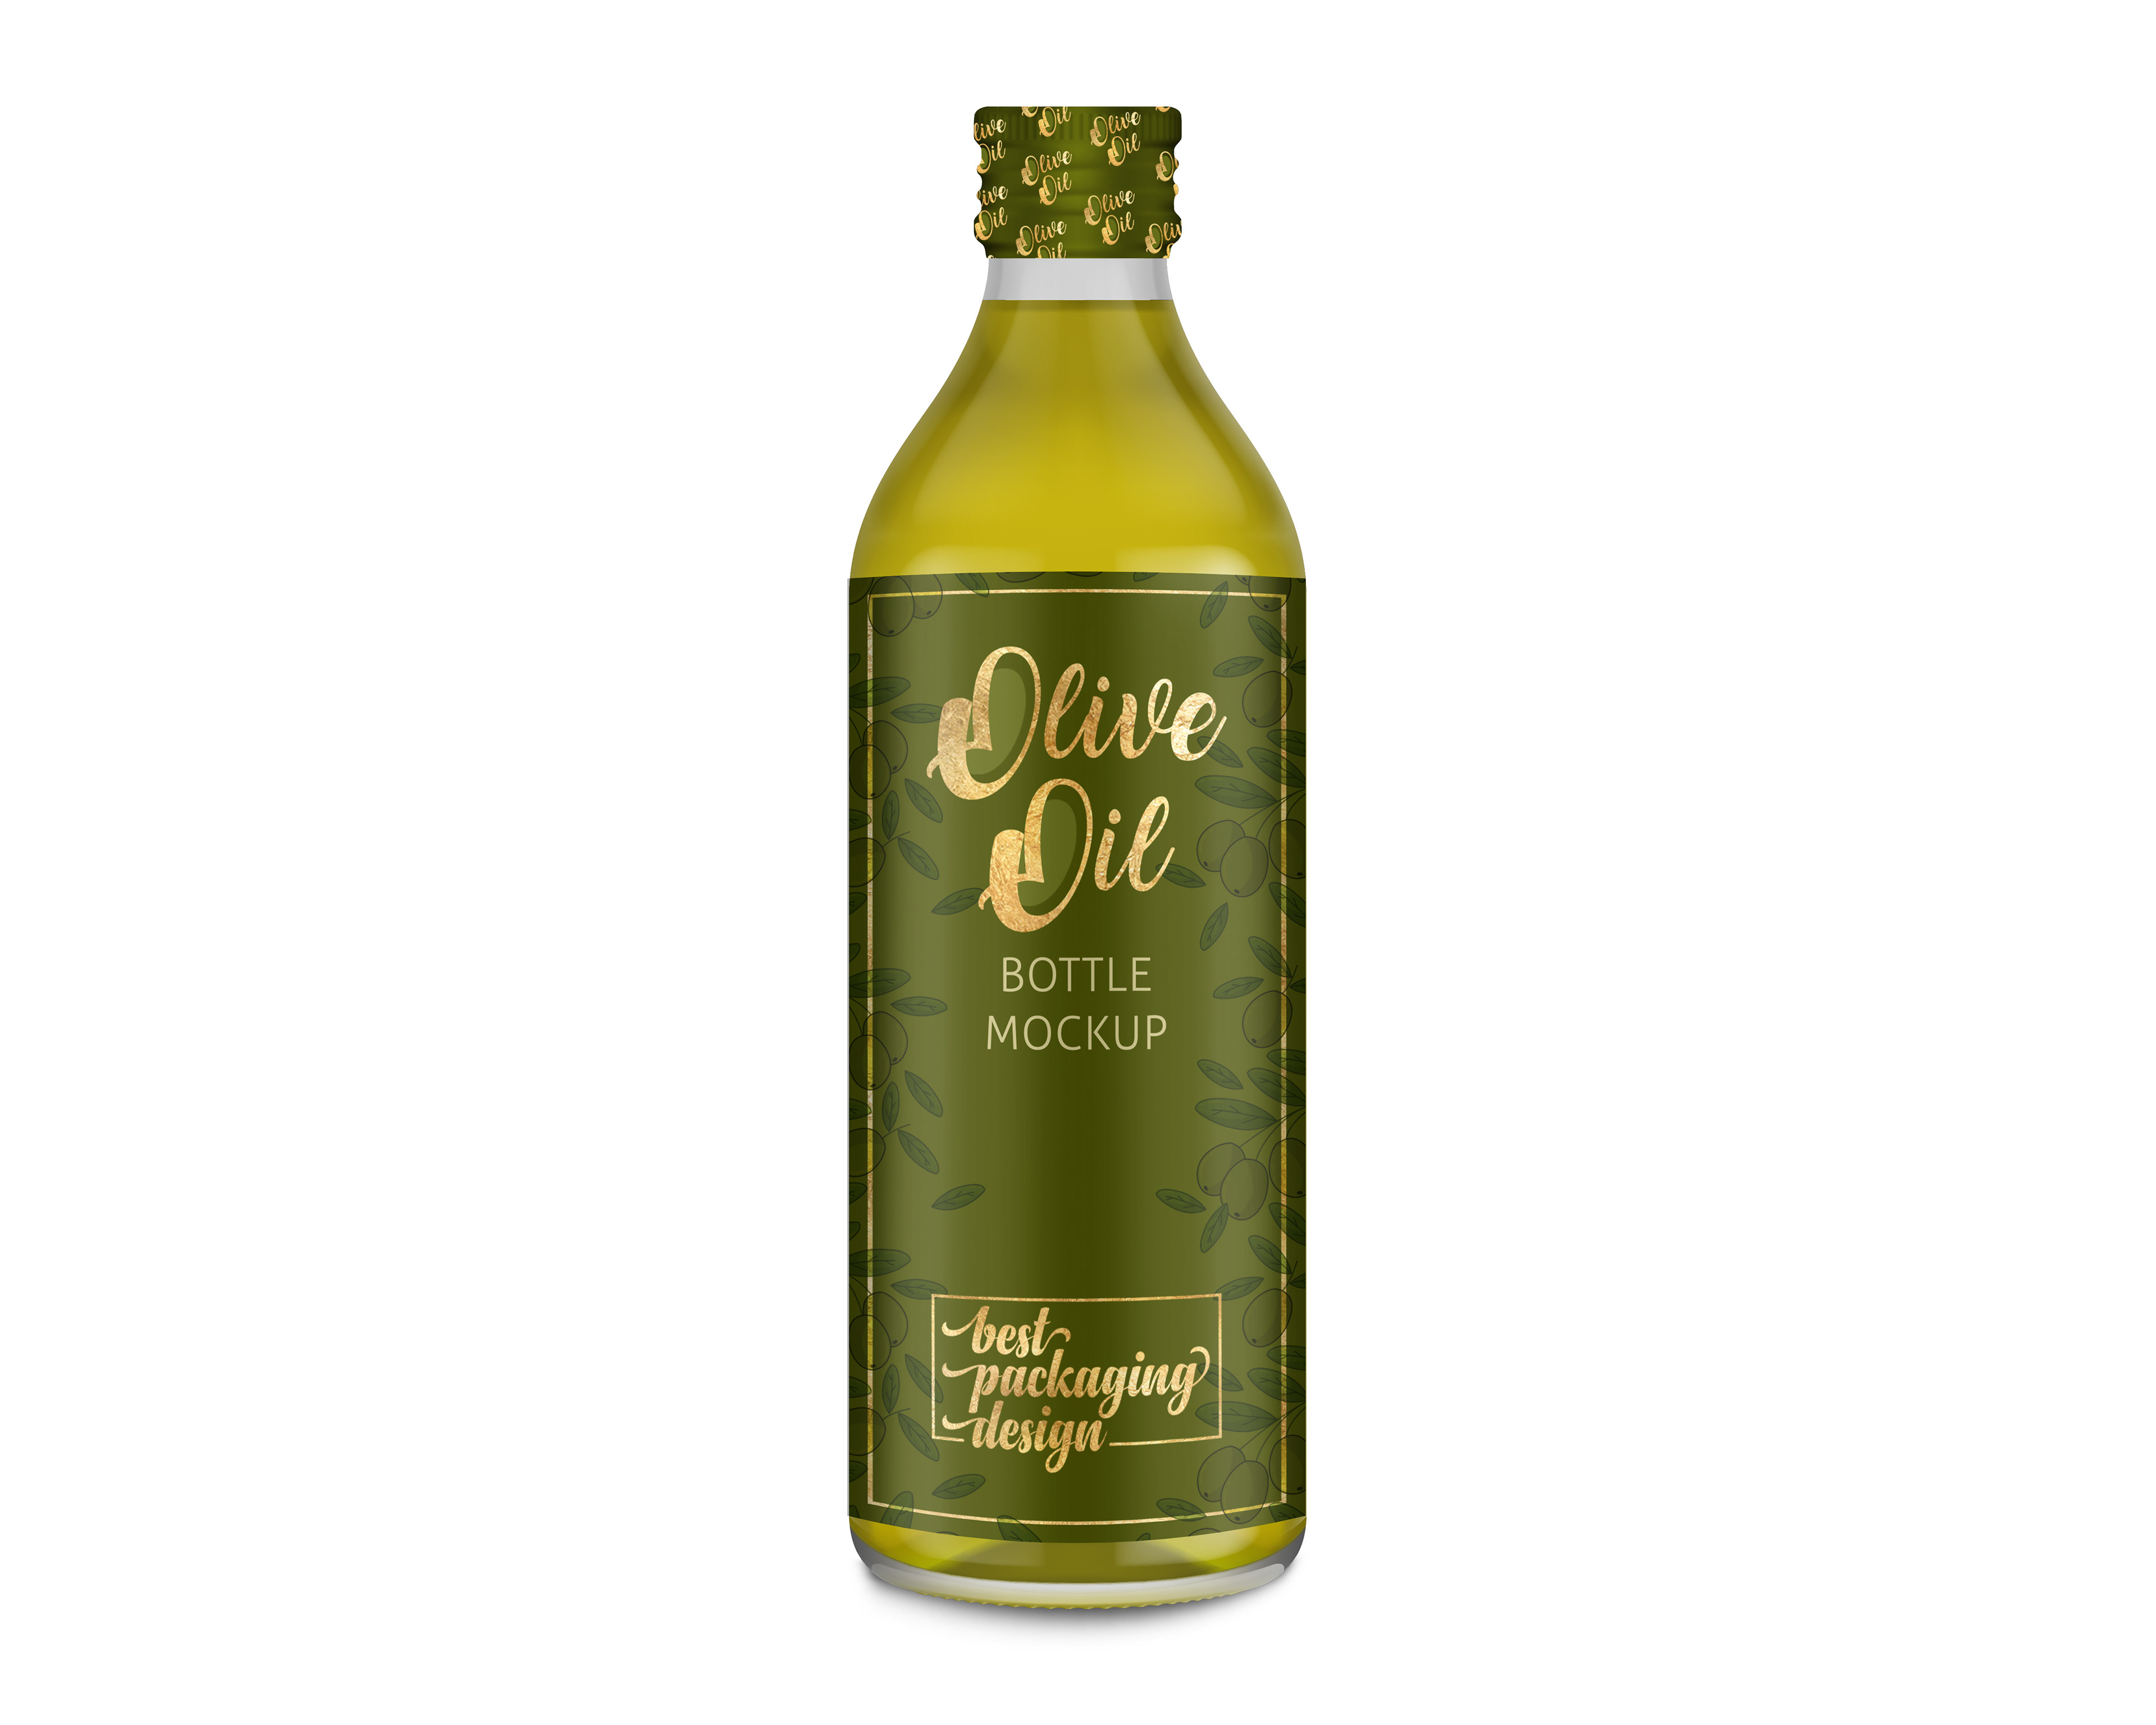 Оливковое масло колумб. Мокап оливковое масло. Мокап бутылки оливкового масла. Бутылка масла мокап. Мокап бутылка растительного масла.